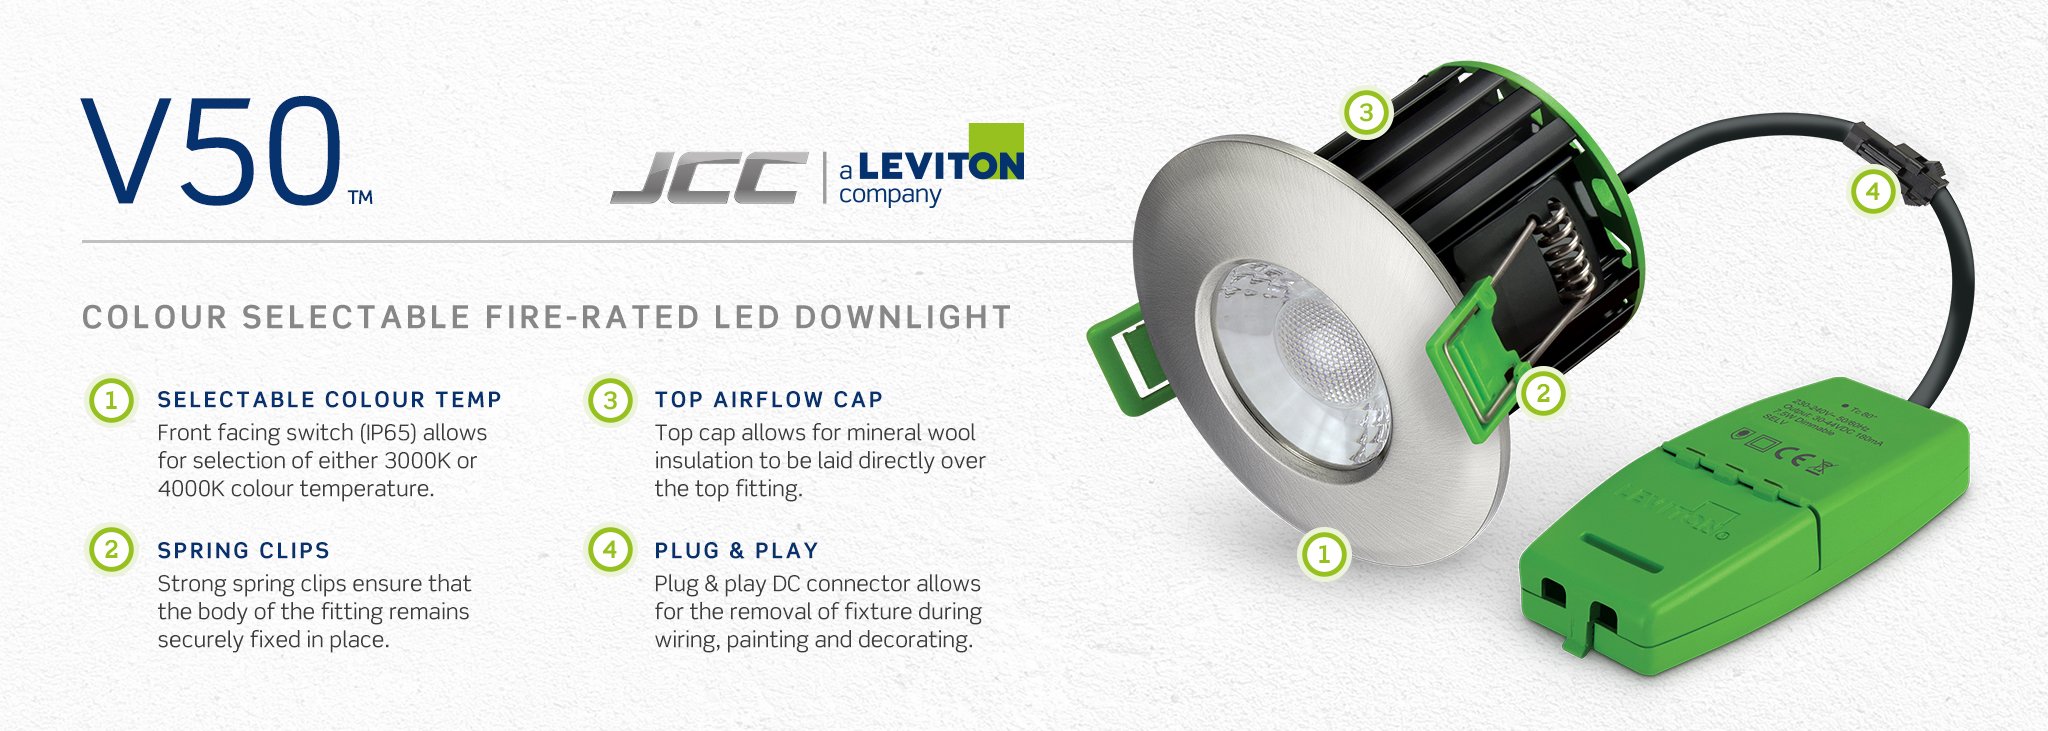 JCC V50 Downlight Key Features Banner